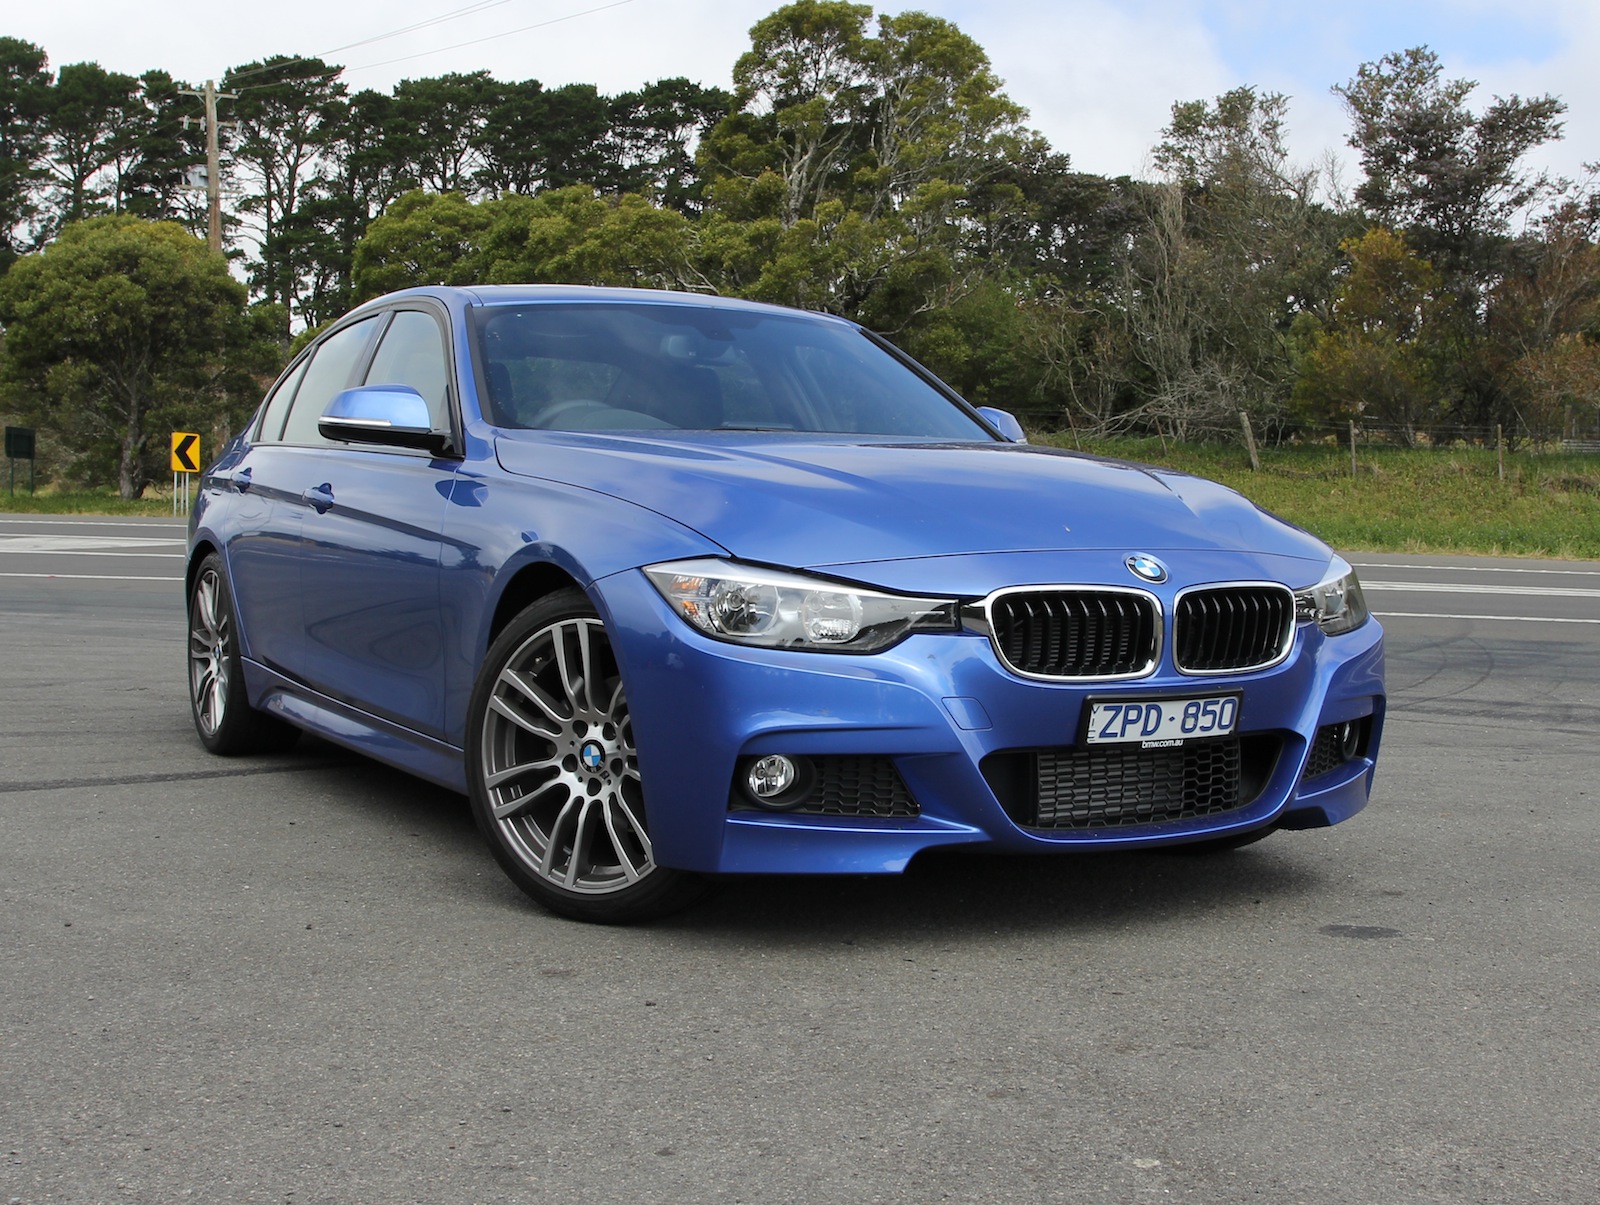 2014 BMW 316i M Sport Review by Car Advice - autoevolution1600 x 1205